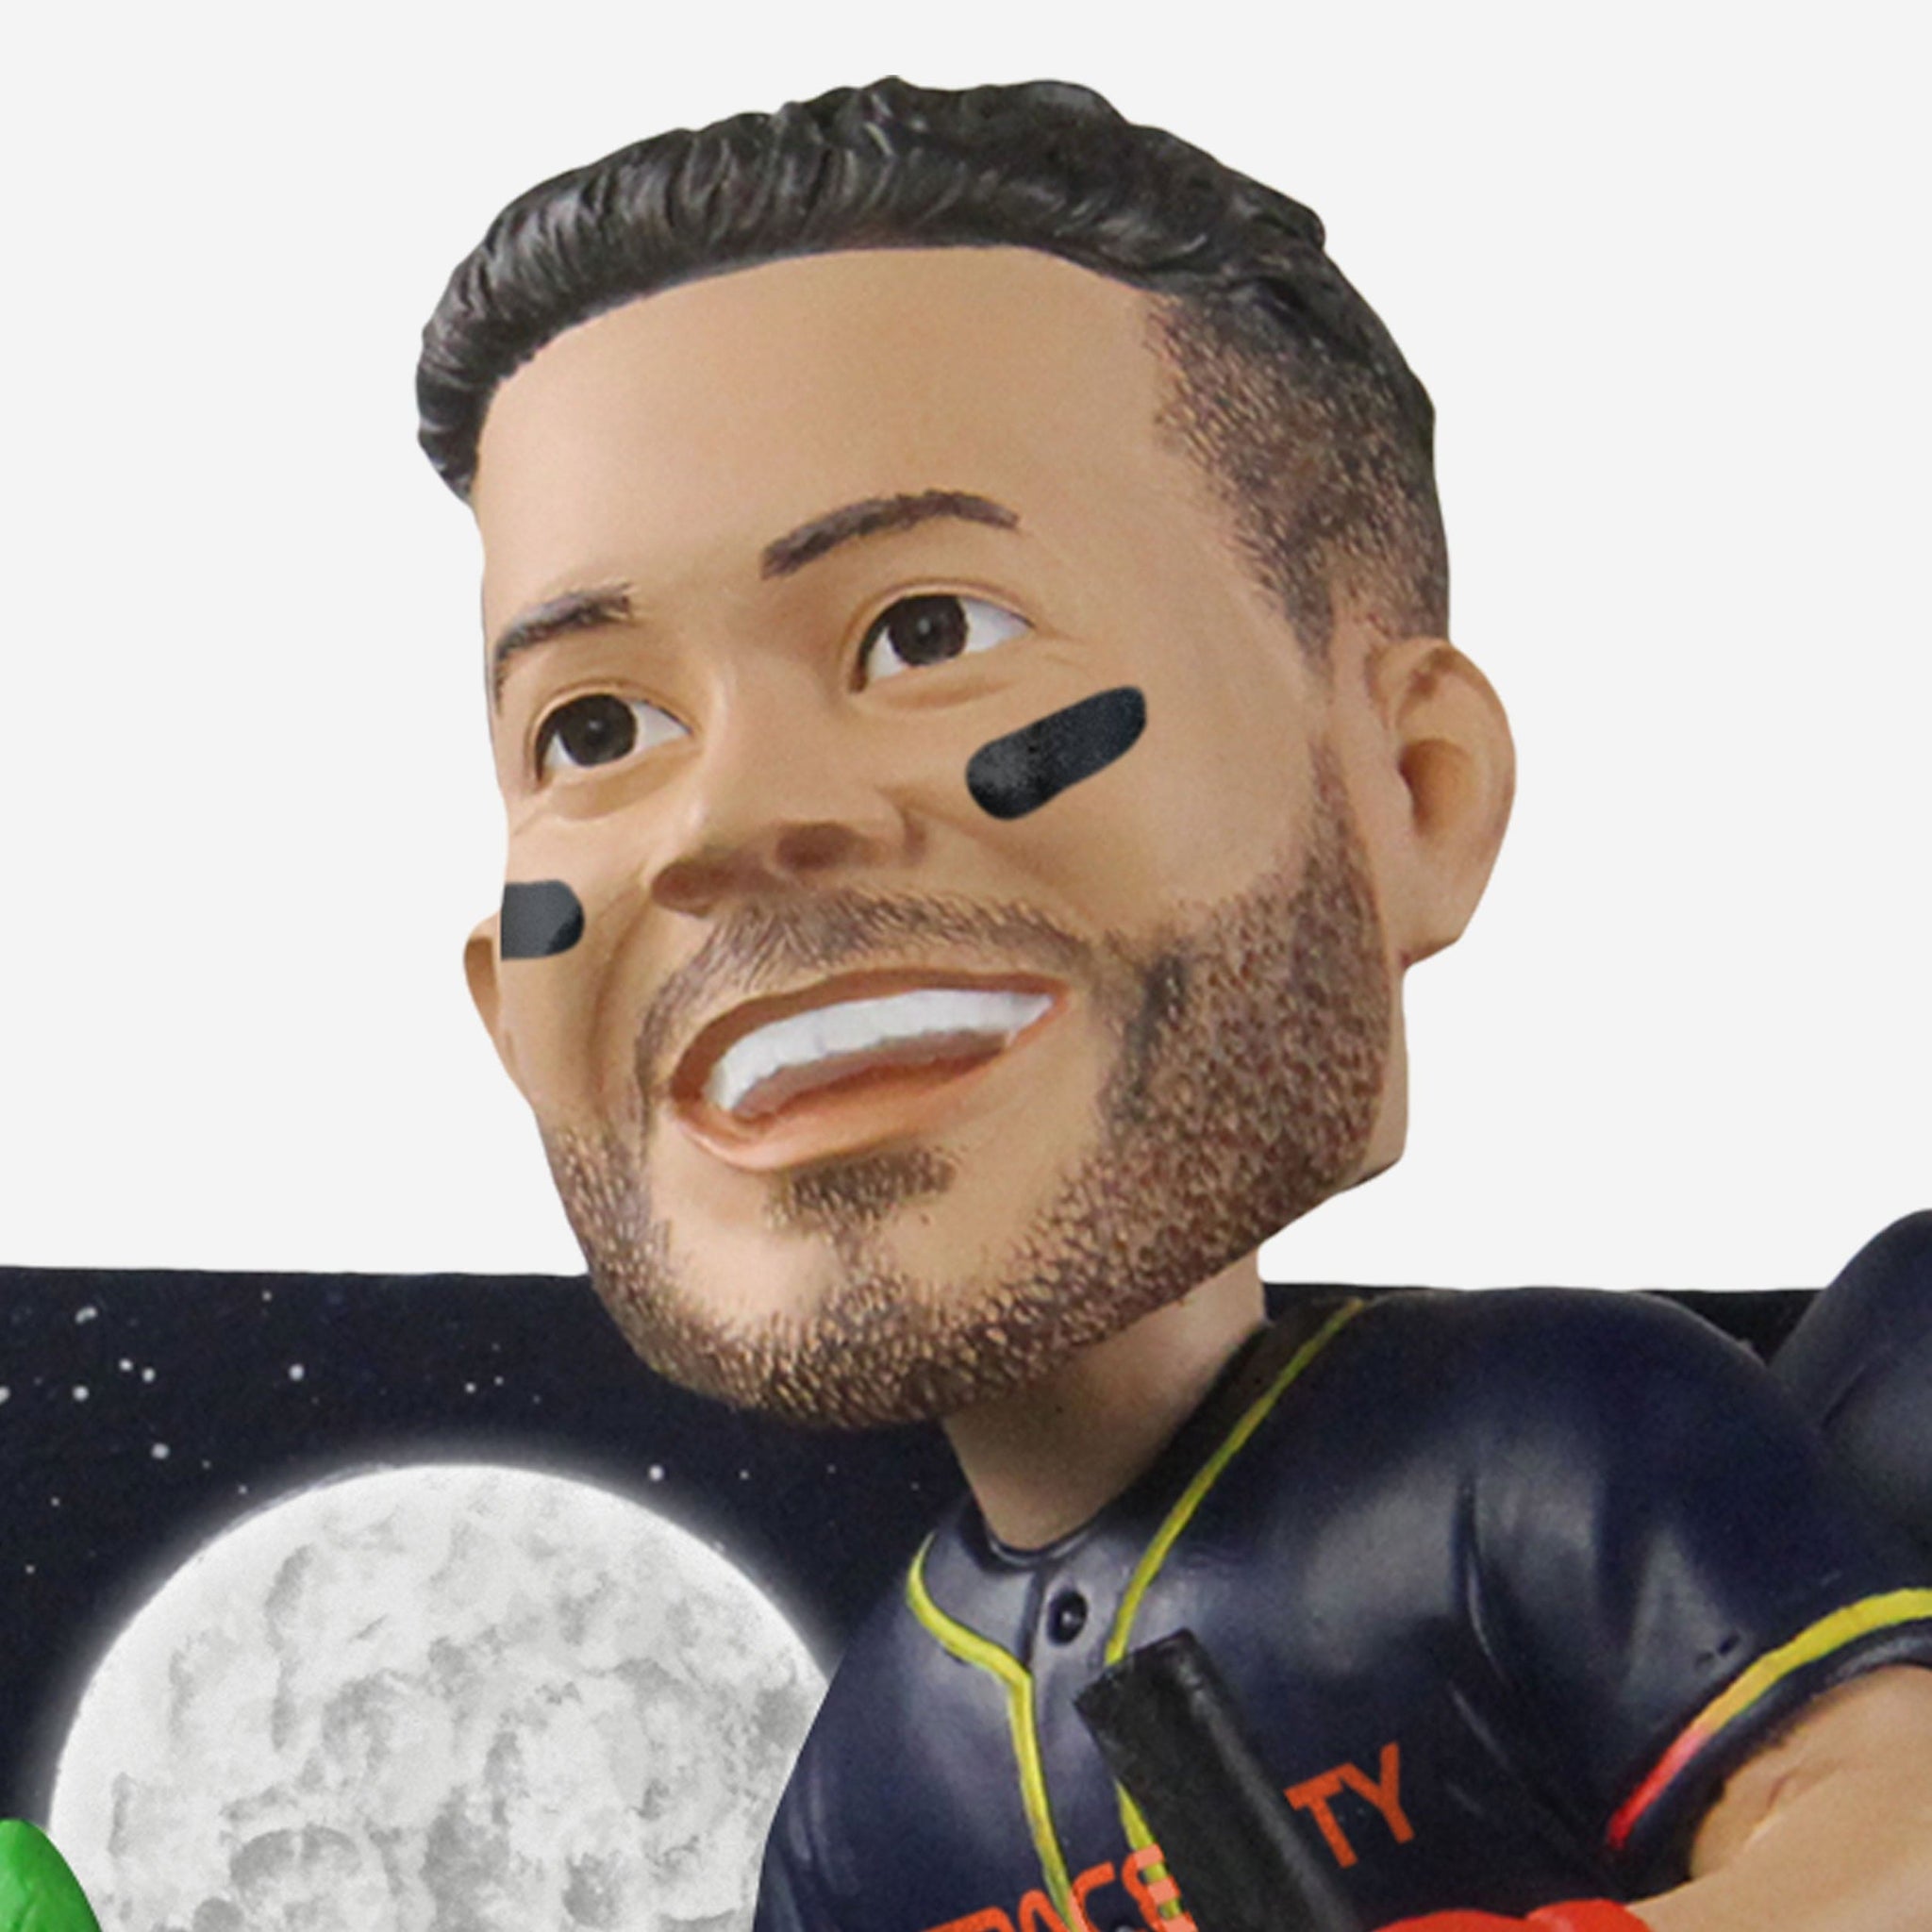 FOCO Releases Astros José Altuve and Mascot Orbit 'Fist Bump' City